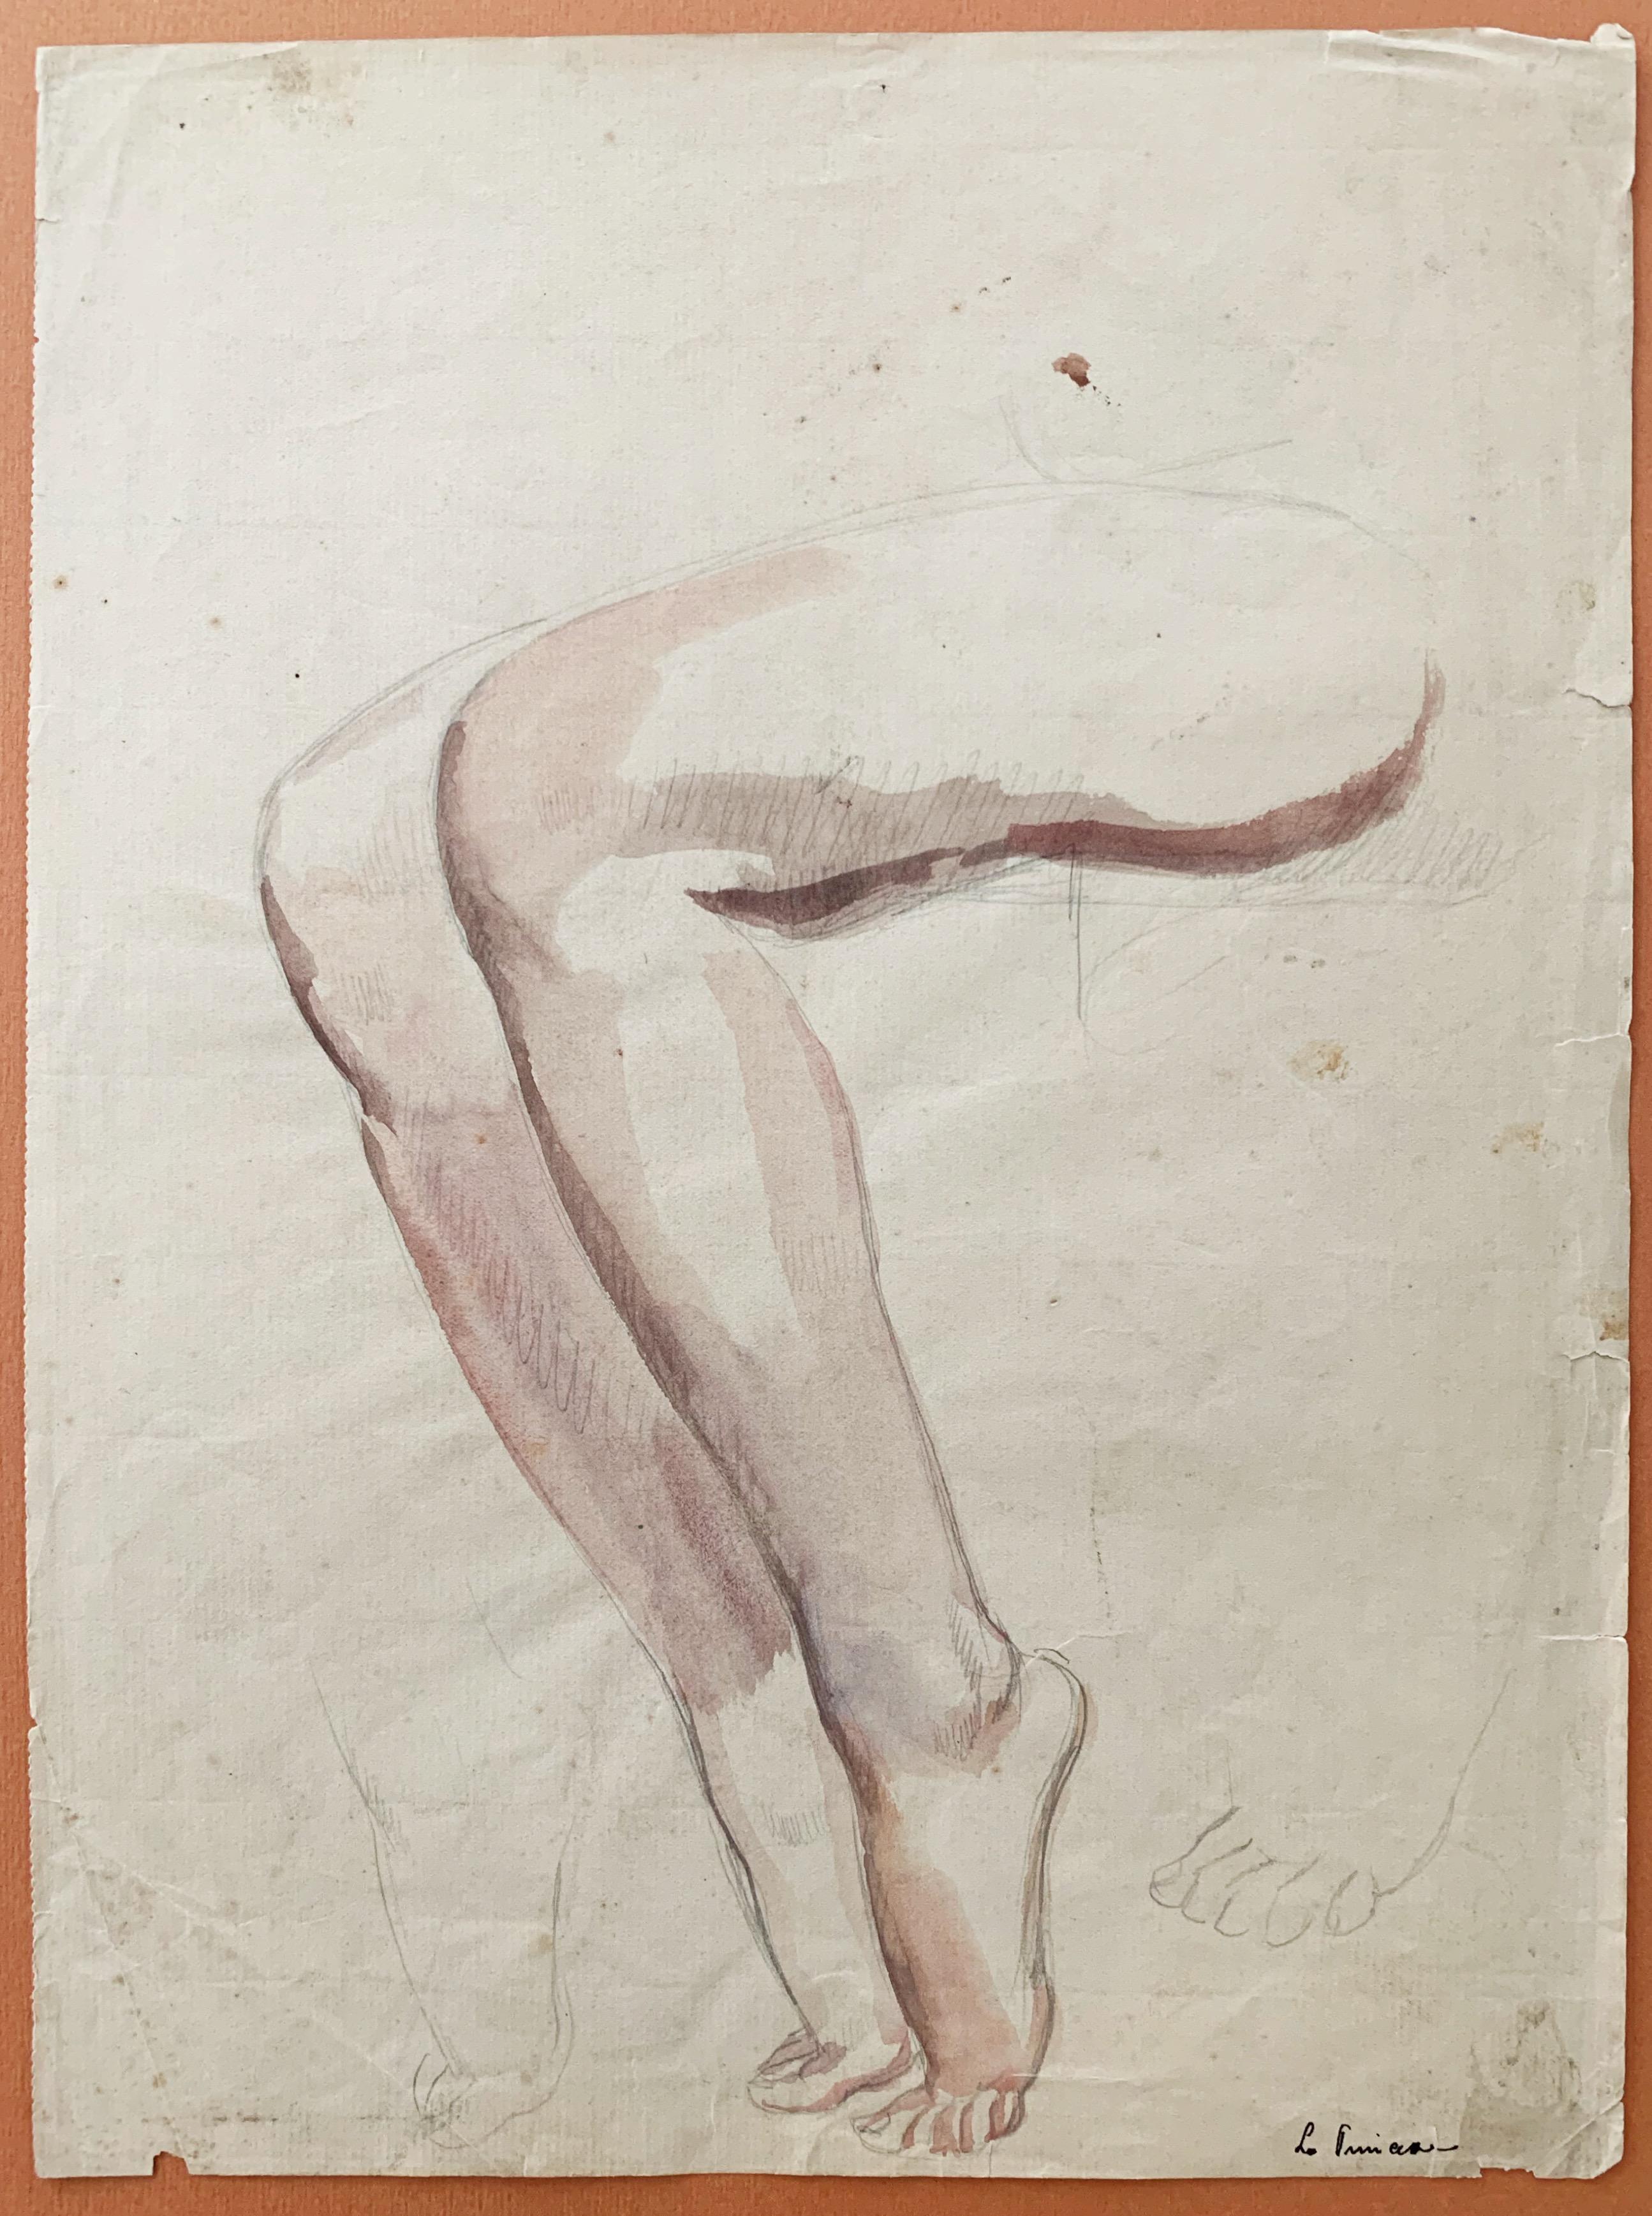 Raphaël Delorme Nude - Study, preparatory work for “La Princesse”, watercolor and pencil on paper